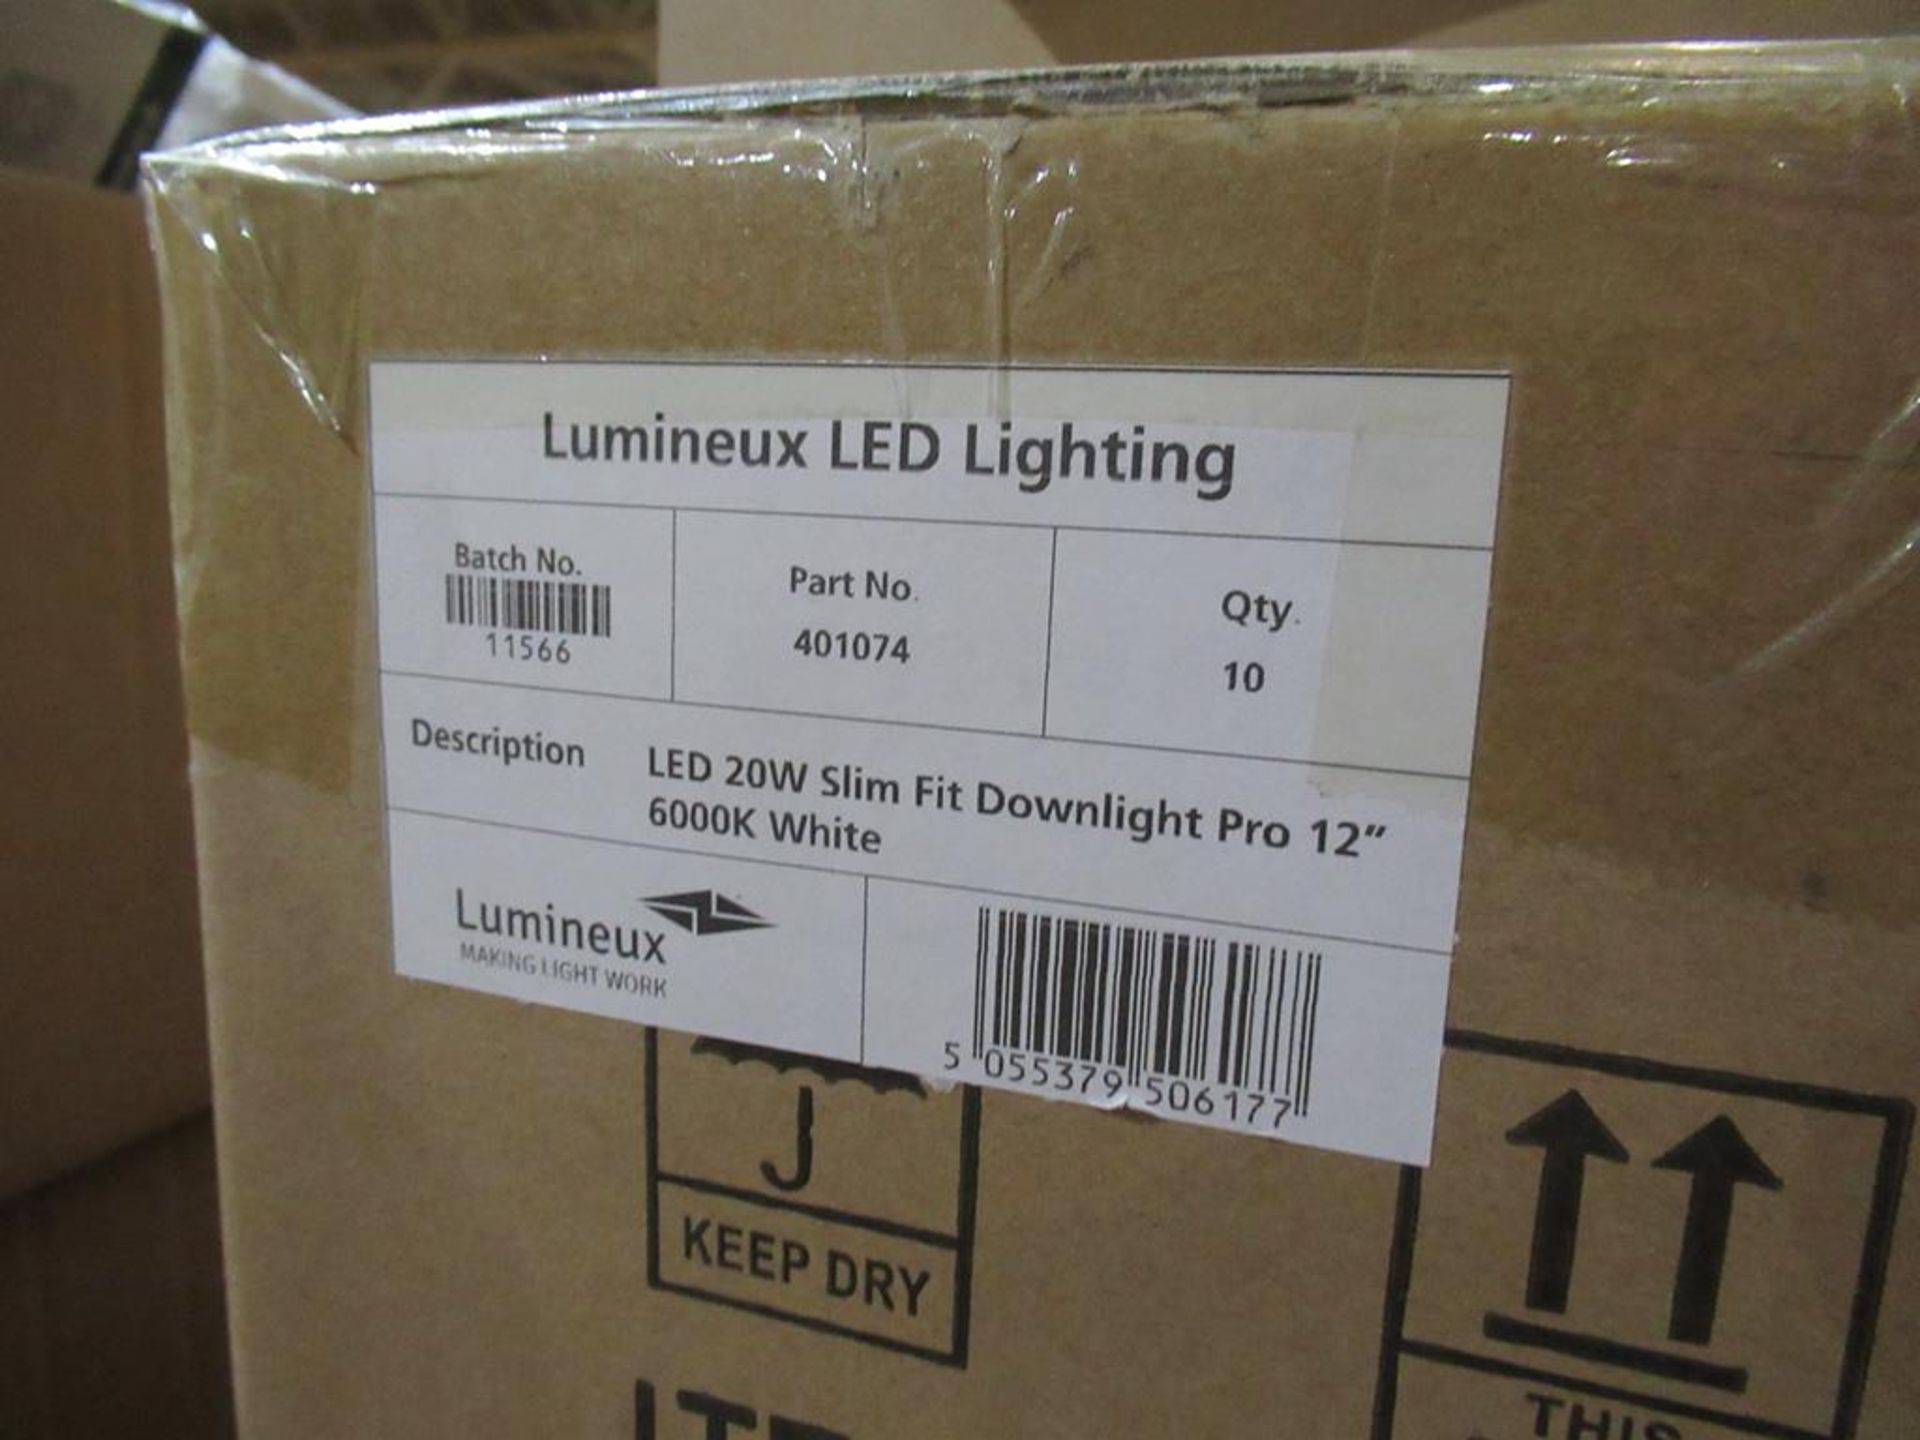 32 x Lumiuneux LED 20W Slimfit Downlight Pro 12Inch 6000K White OEM Trade Price £ 855 - Image 2 of 3